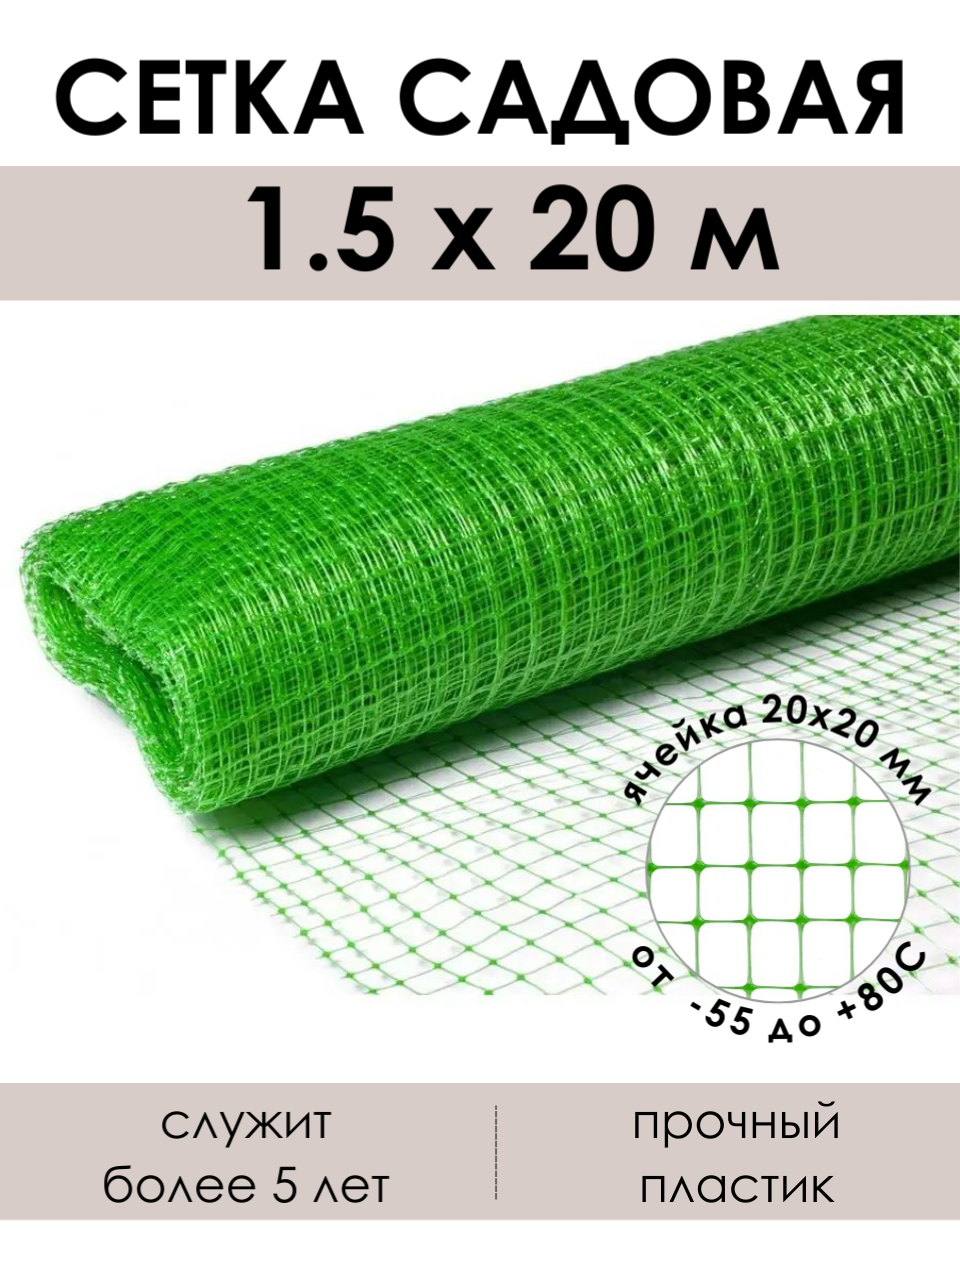 Высокопрочная садовая сетка-решетка в рулоне 1.5х20 м (30 м2), ячейка 20х20 мм, 80 г/м2, зеленая